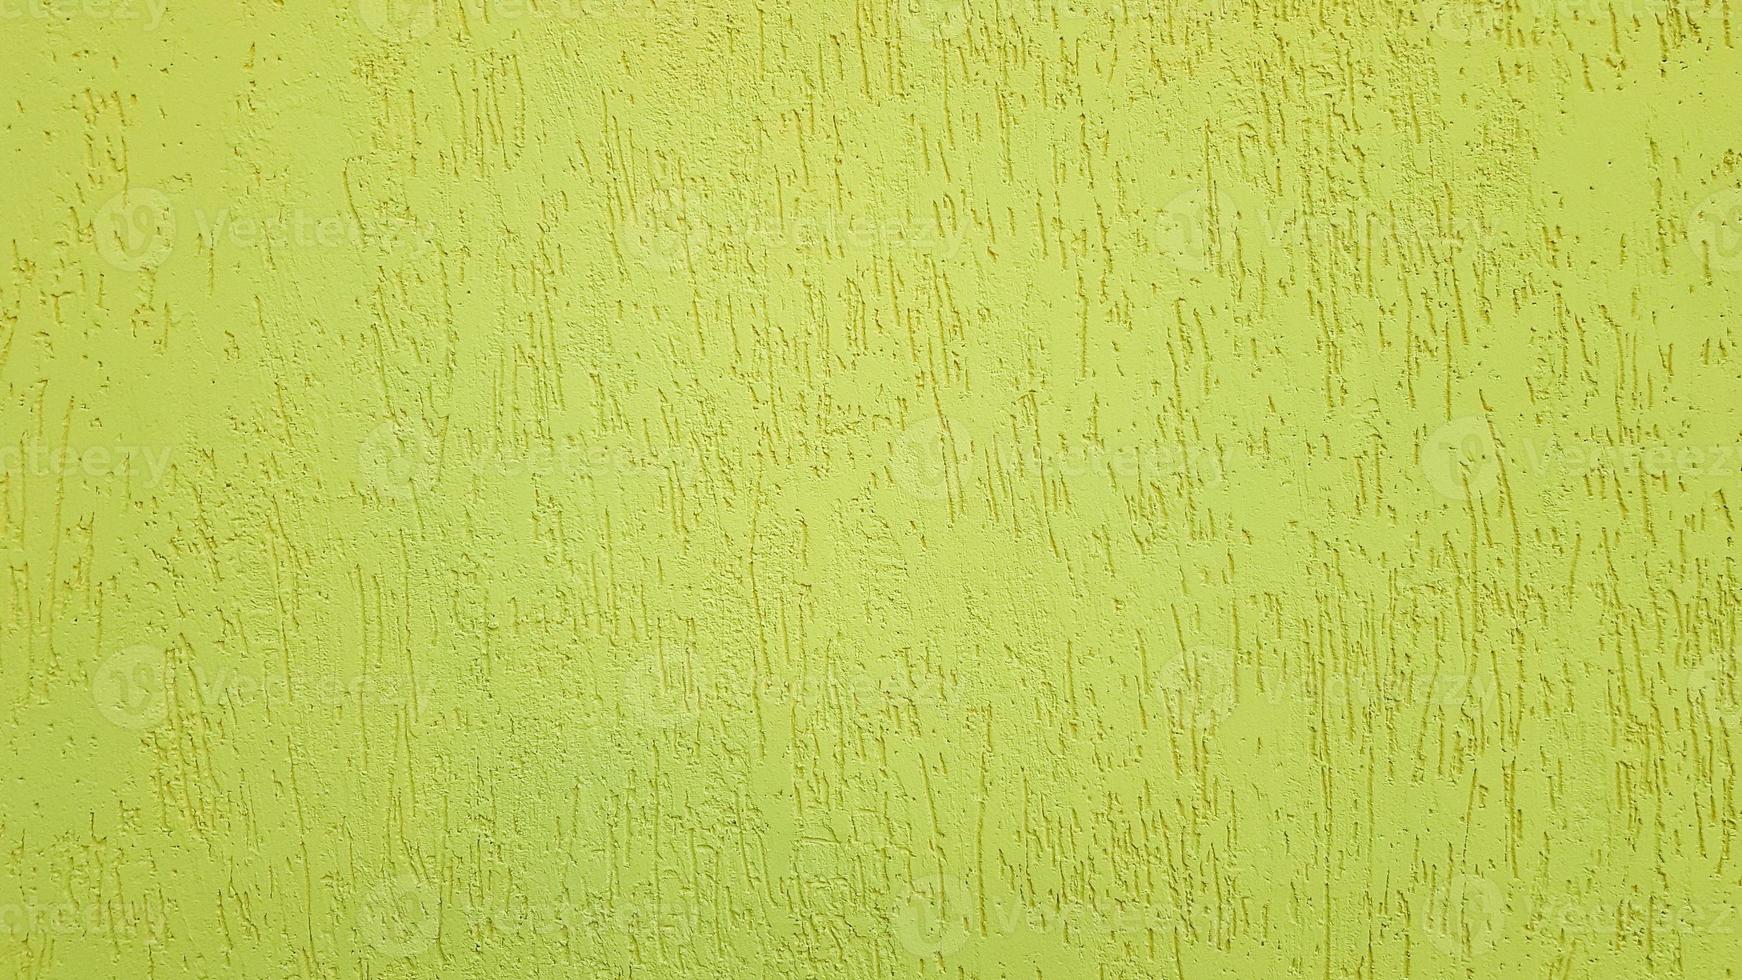 gamla guld gips vägg textur gul bakgrund. texturerat texturerat vägggips. präglad väggdekoration. stuckaturväggar. präglad väggdekoration. dekorativ gips målas gul. foto